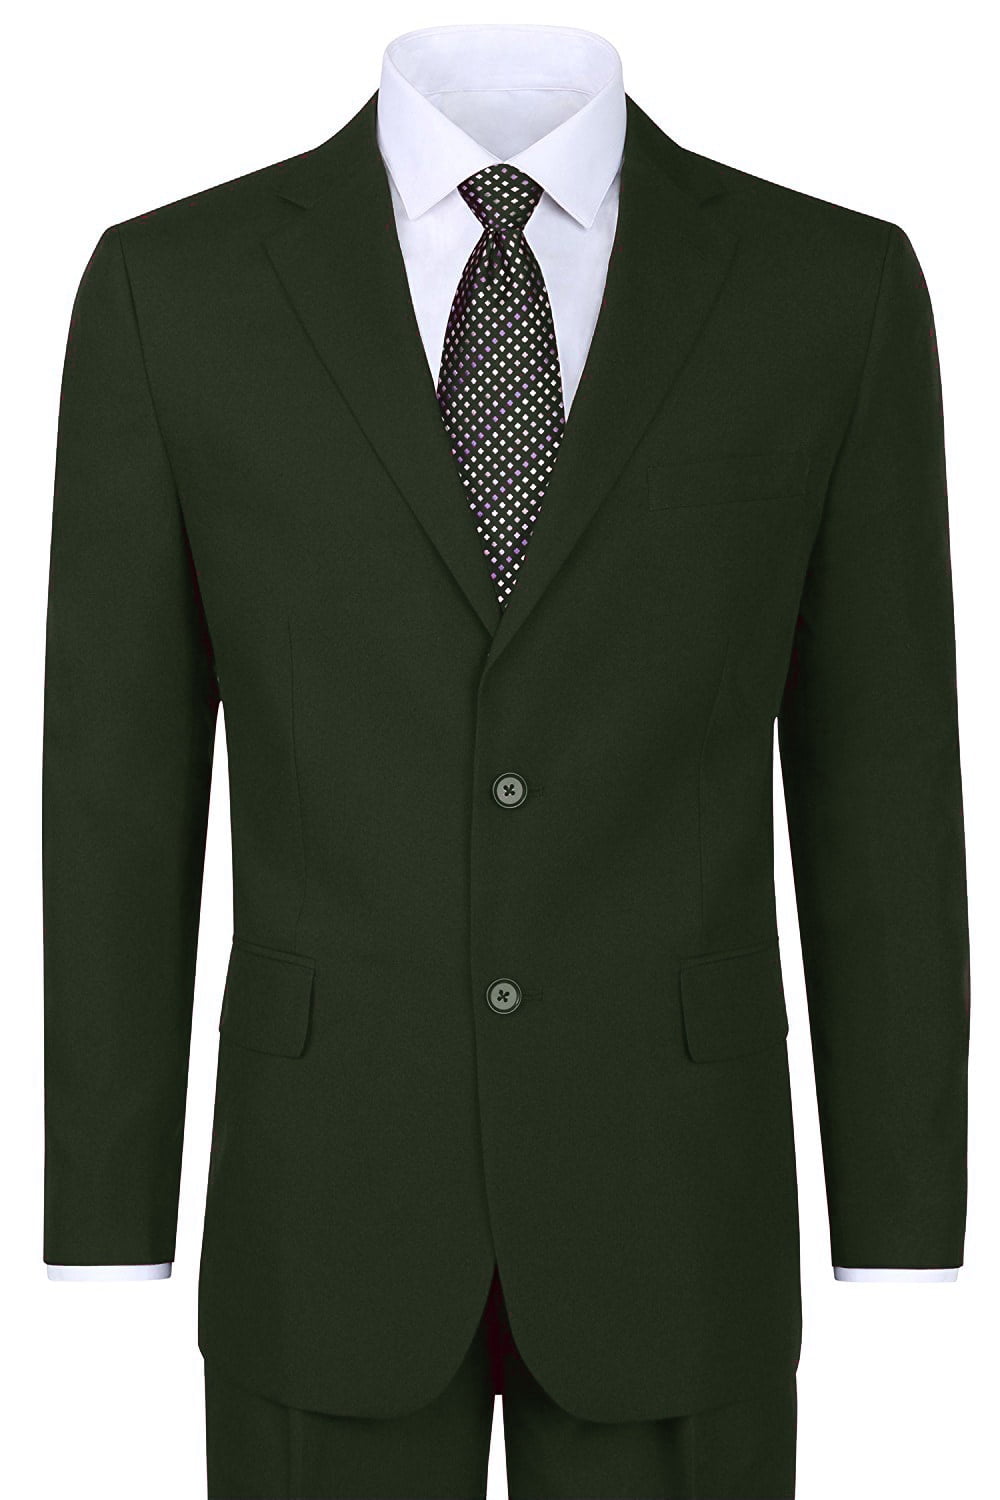 Men Green Suits Designer Grooms Wedding Stylish Dinner Party Suits  (Coat+Pants) | eBay